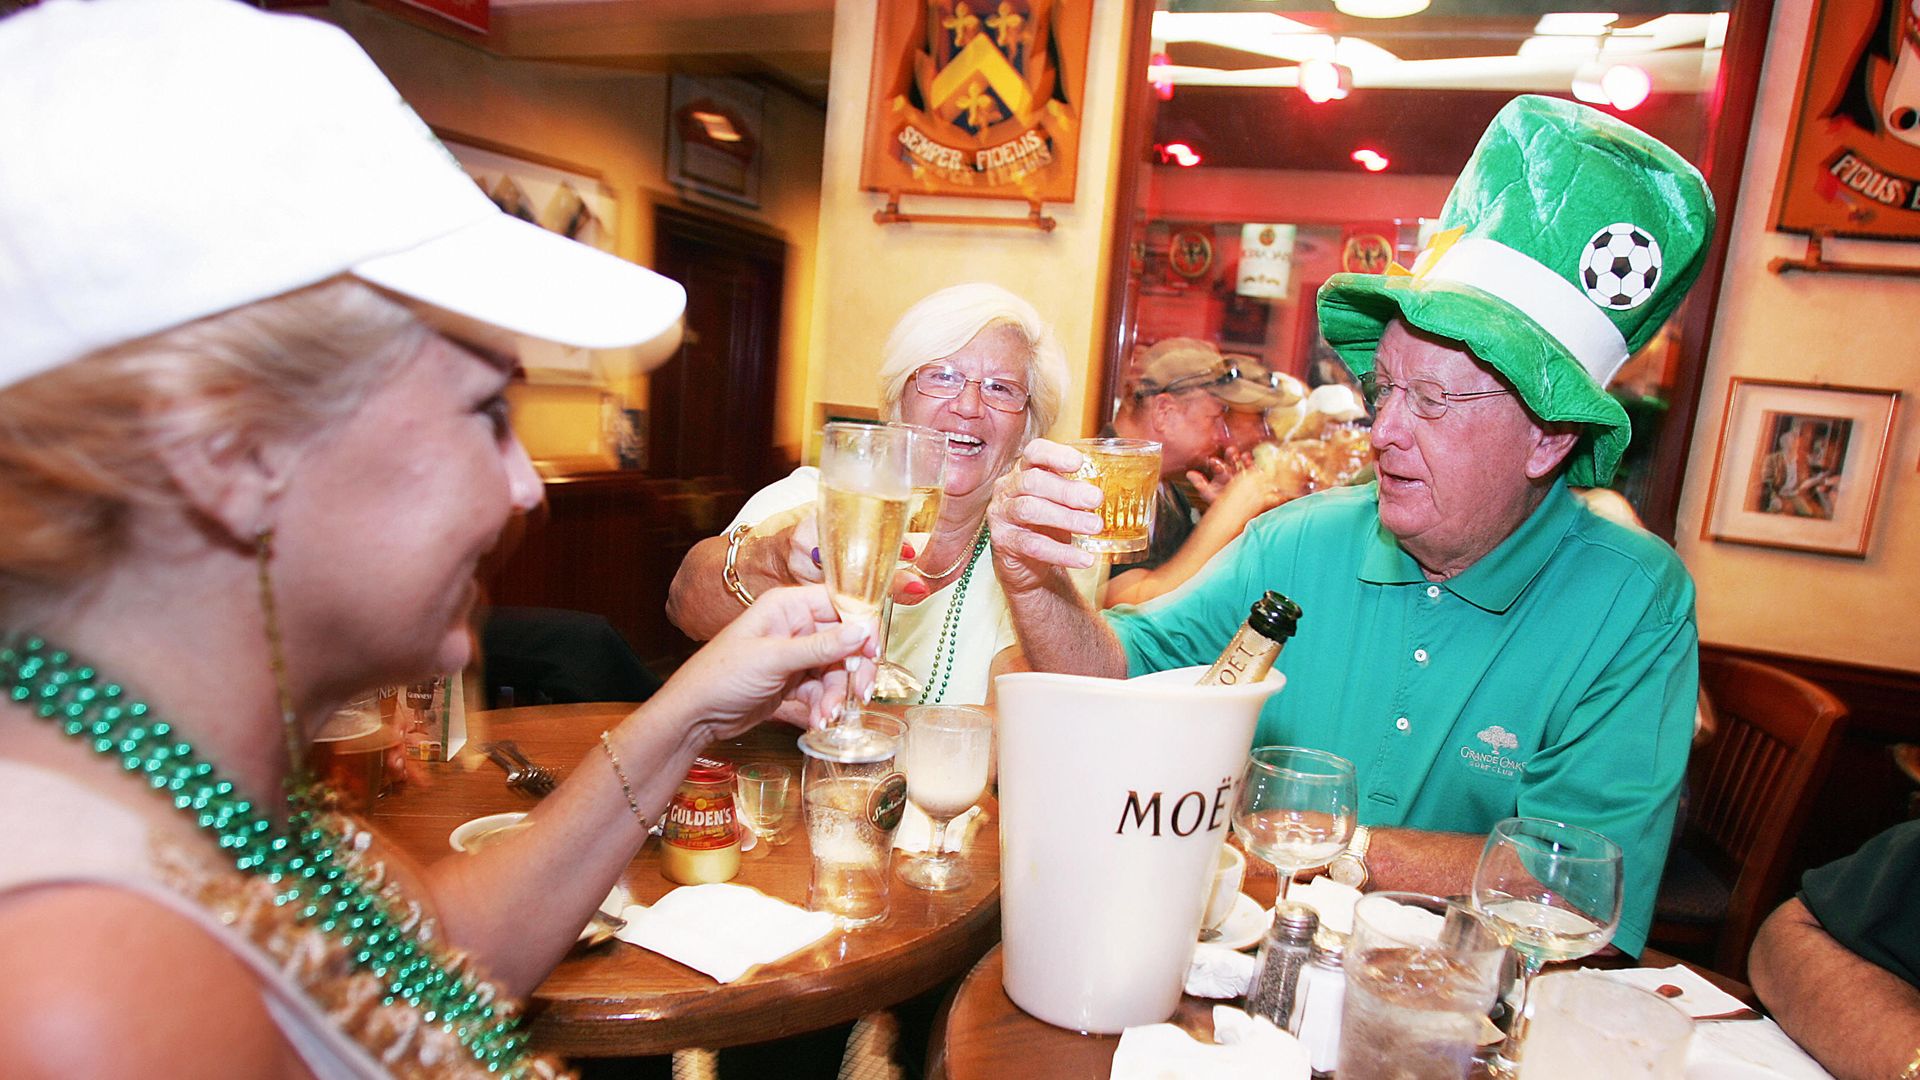 St. Patrick's Day revelers celebrate at an Irish pub in Miami.